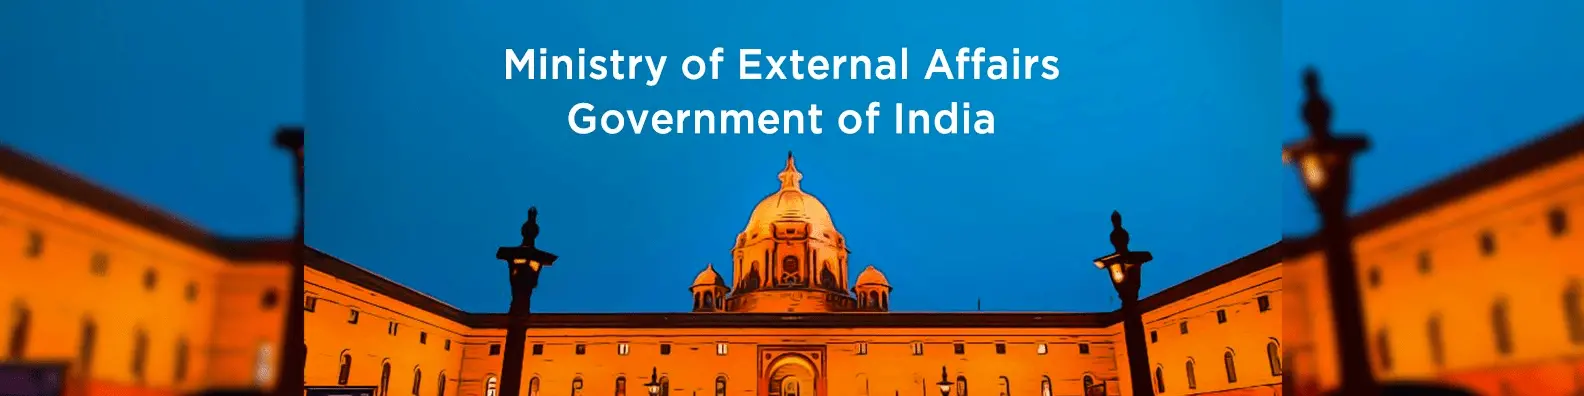 MEA Govt of India Internship Program